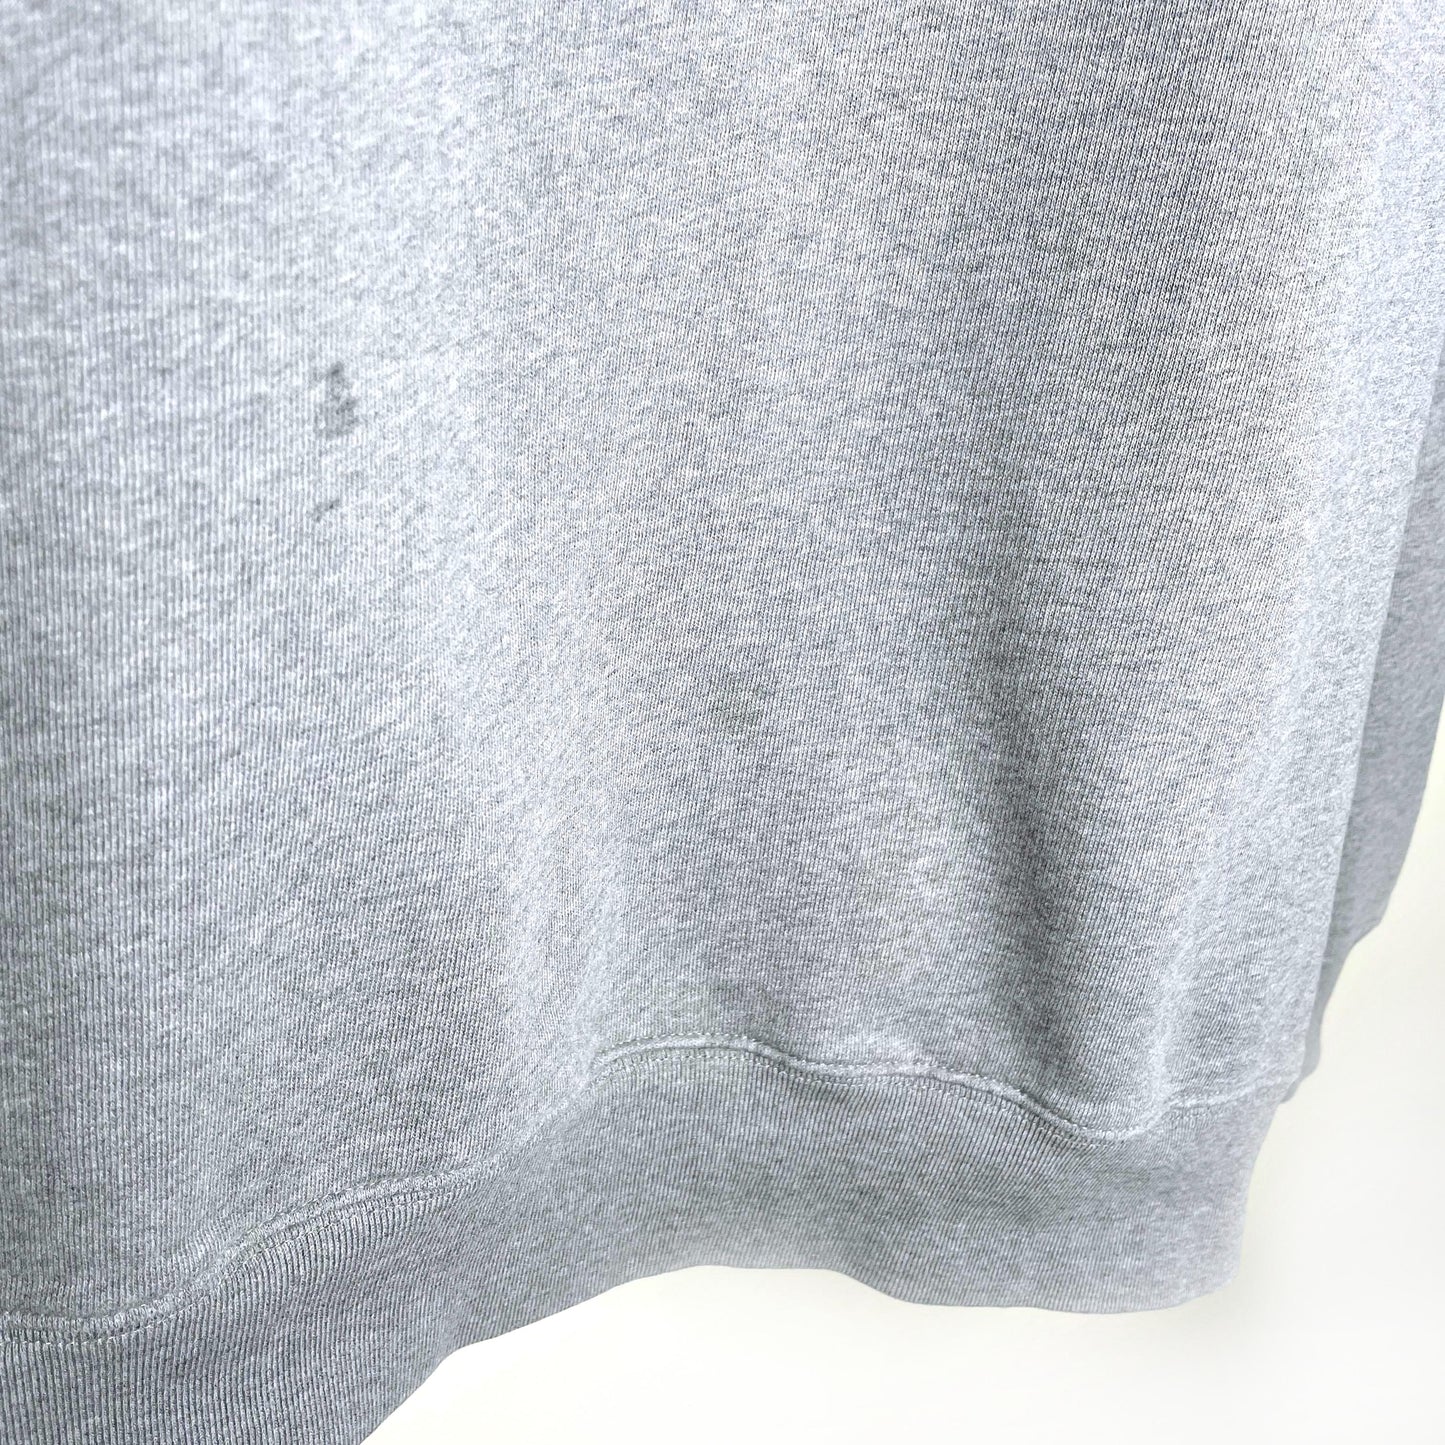 acne studios grey fairview face patch sweatshirt - size large